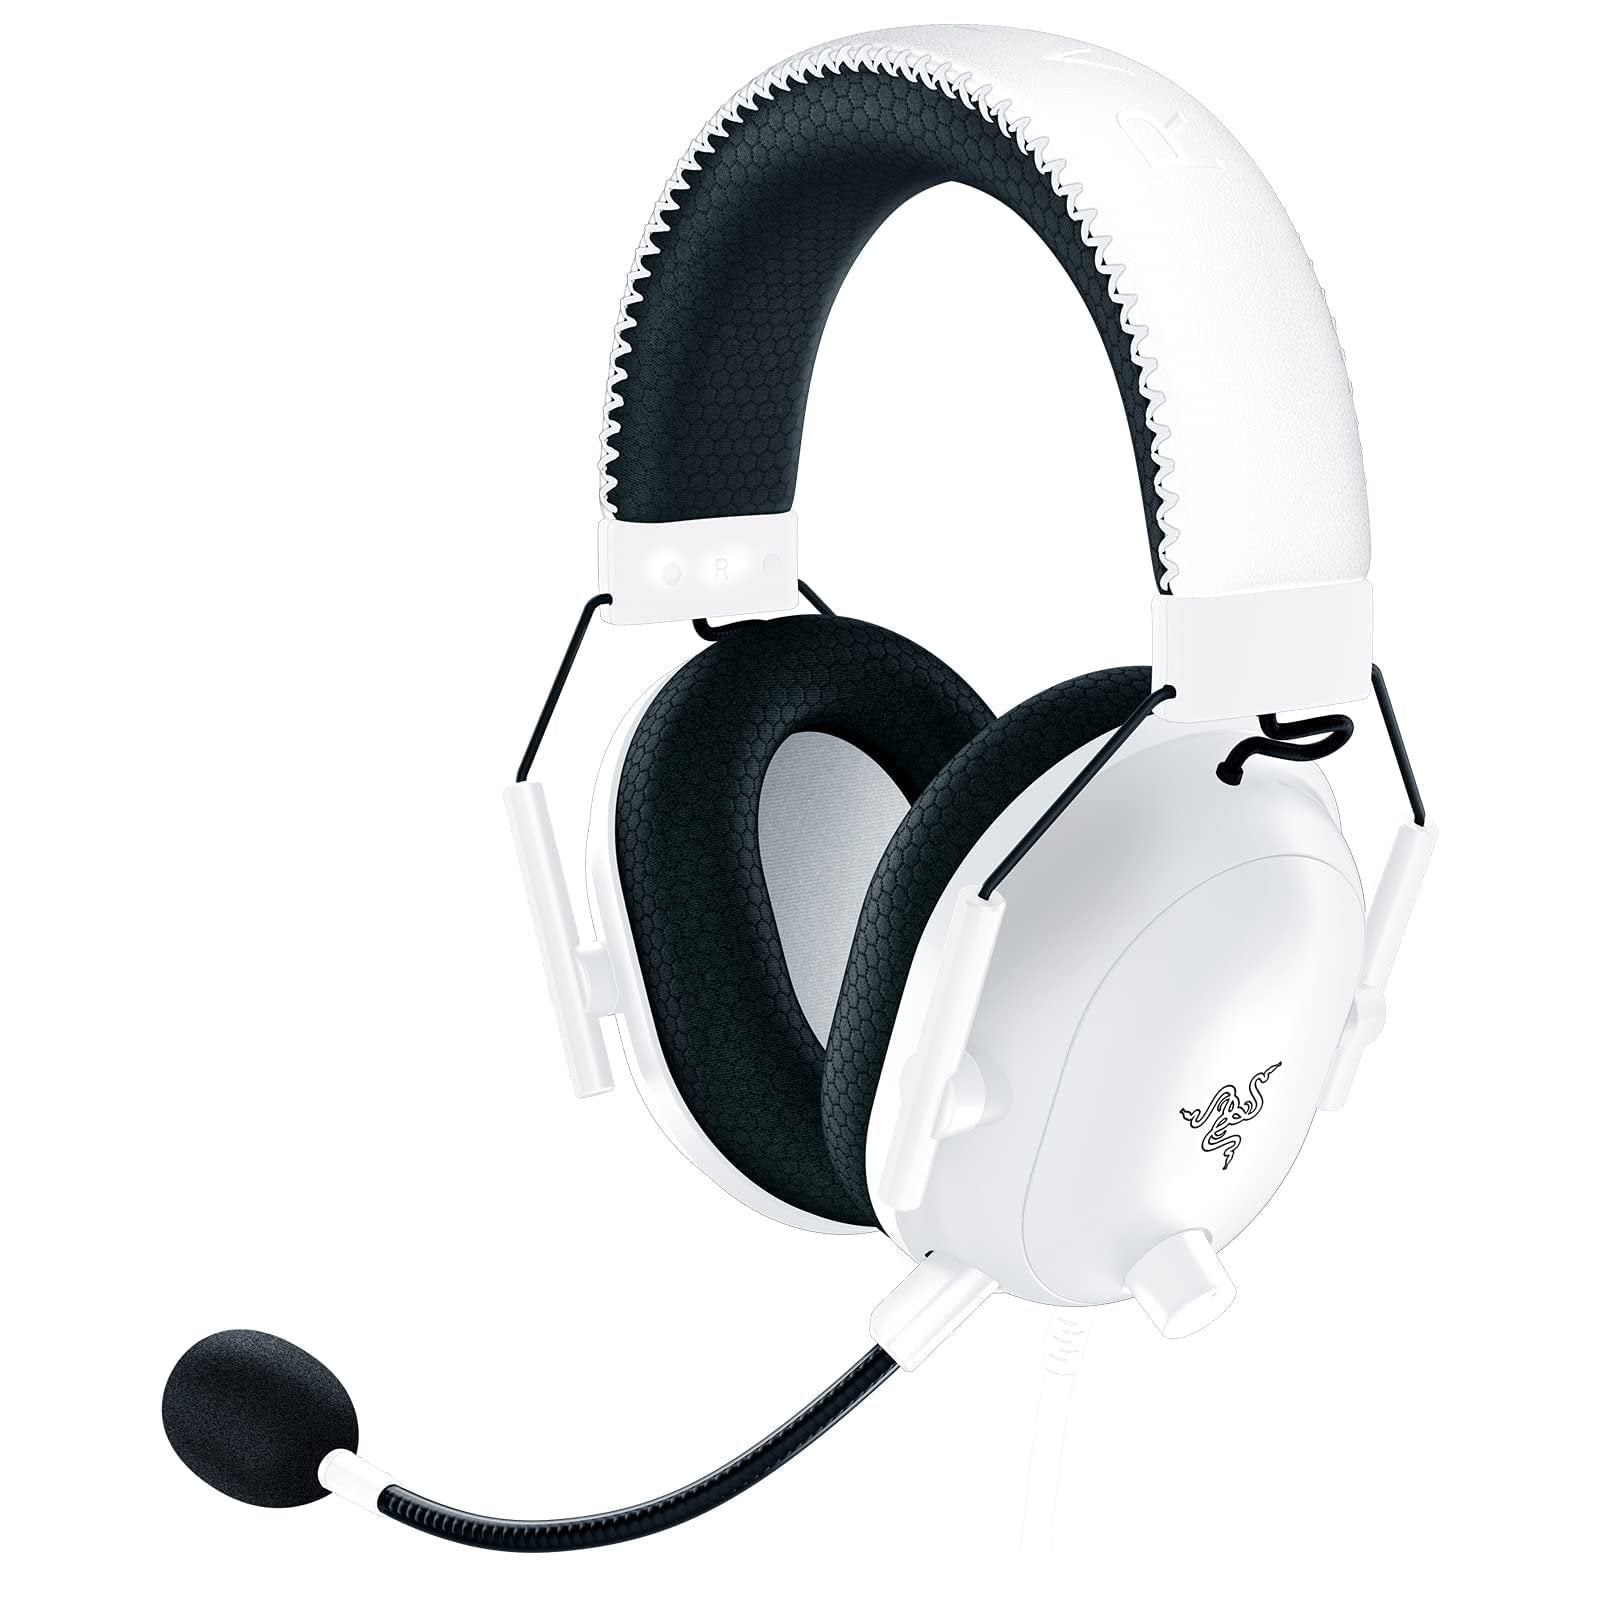 Razer BlackShark V2 Pro Wireless Gaming Headset: THX 7.1 Spatial Surround Sound, Headphone with Microphone, Detachable Mic - for PC Computers, Mac/Windows, PS4, PS5, Nintendo Switch, White (Renewed)